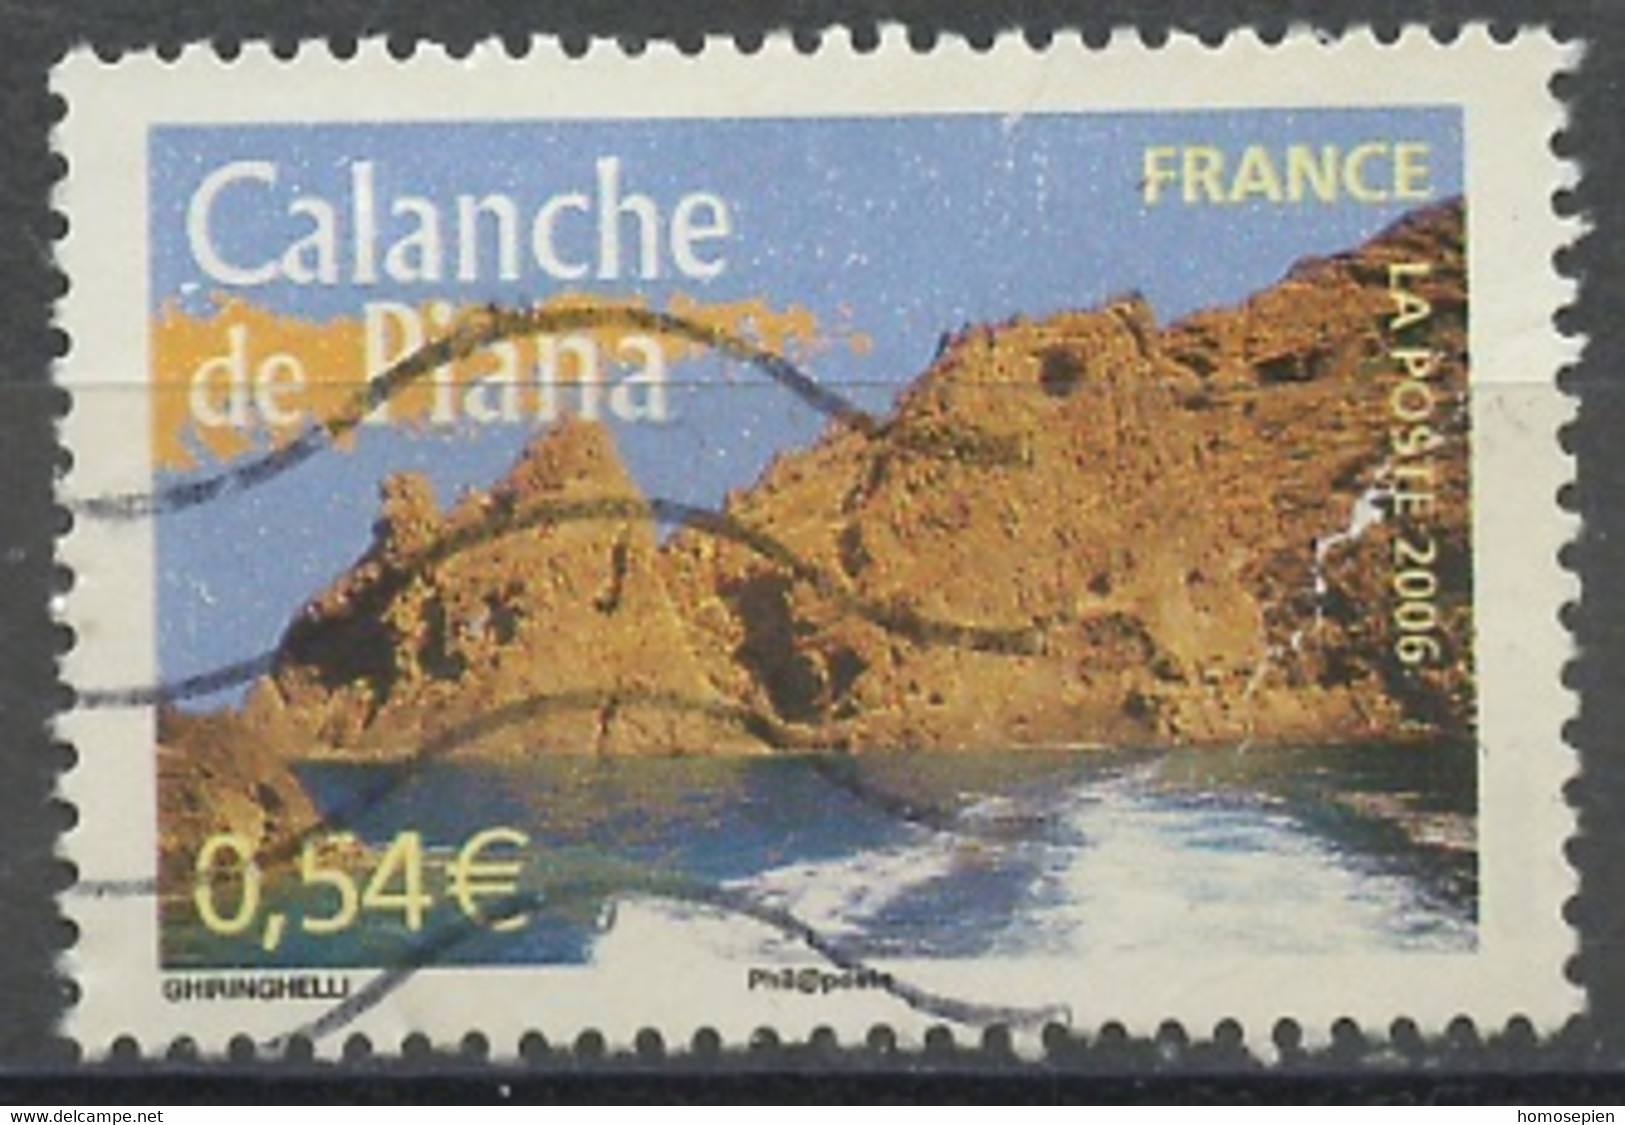 France - Frankreich 2006 Y&T N°3951 - Michel N°4143 (o) - 0,54€ Calanche De Piana - Used Stamps